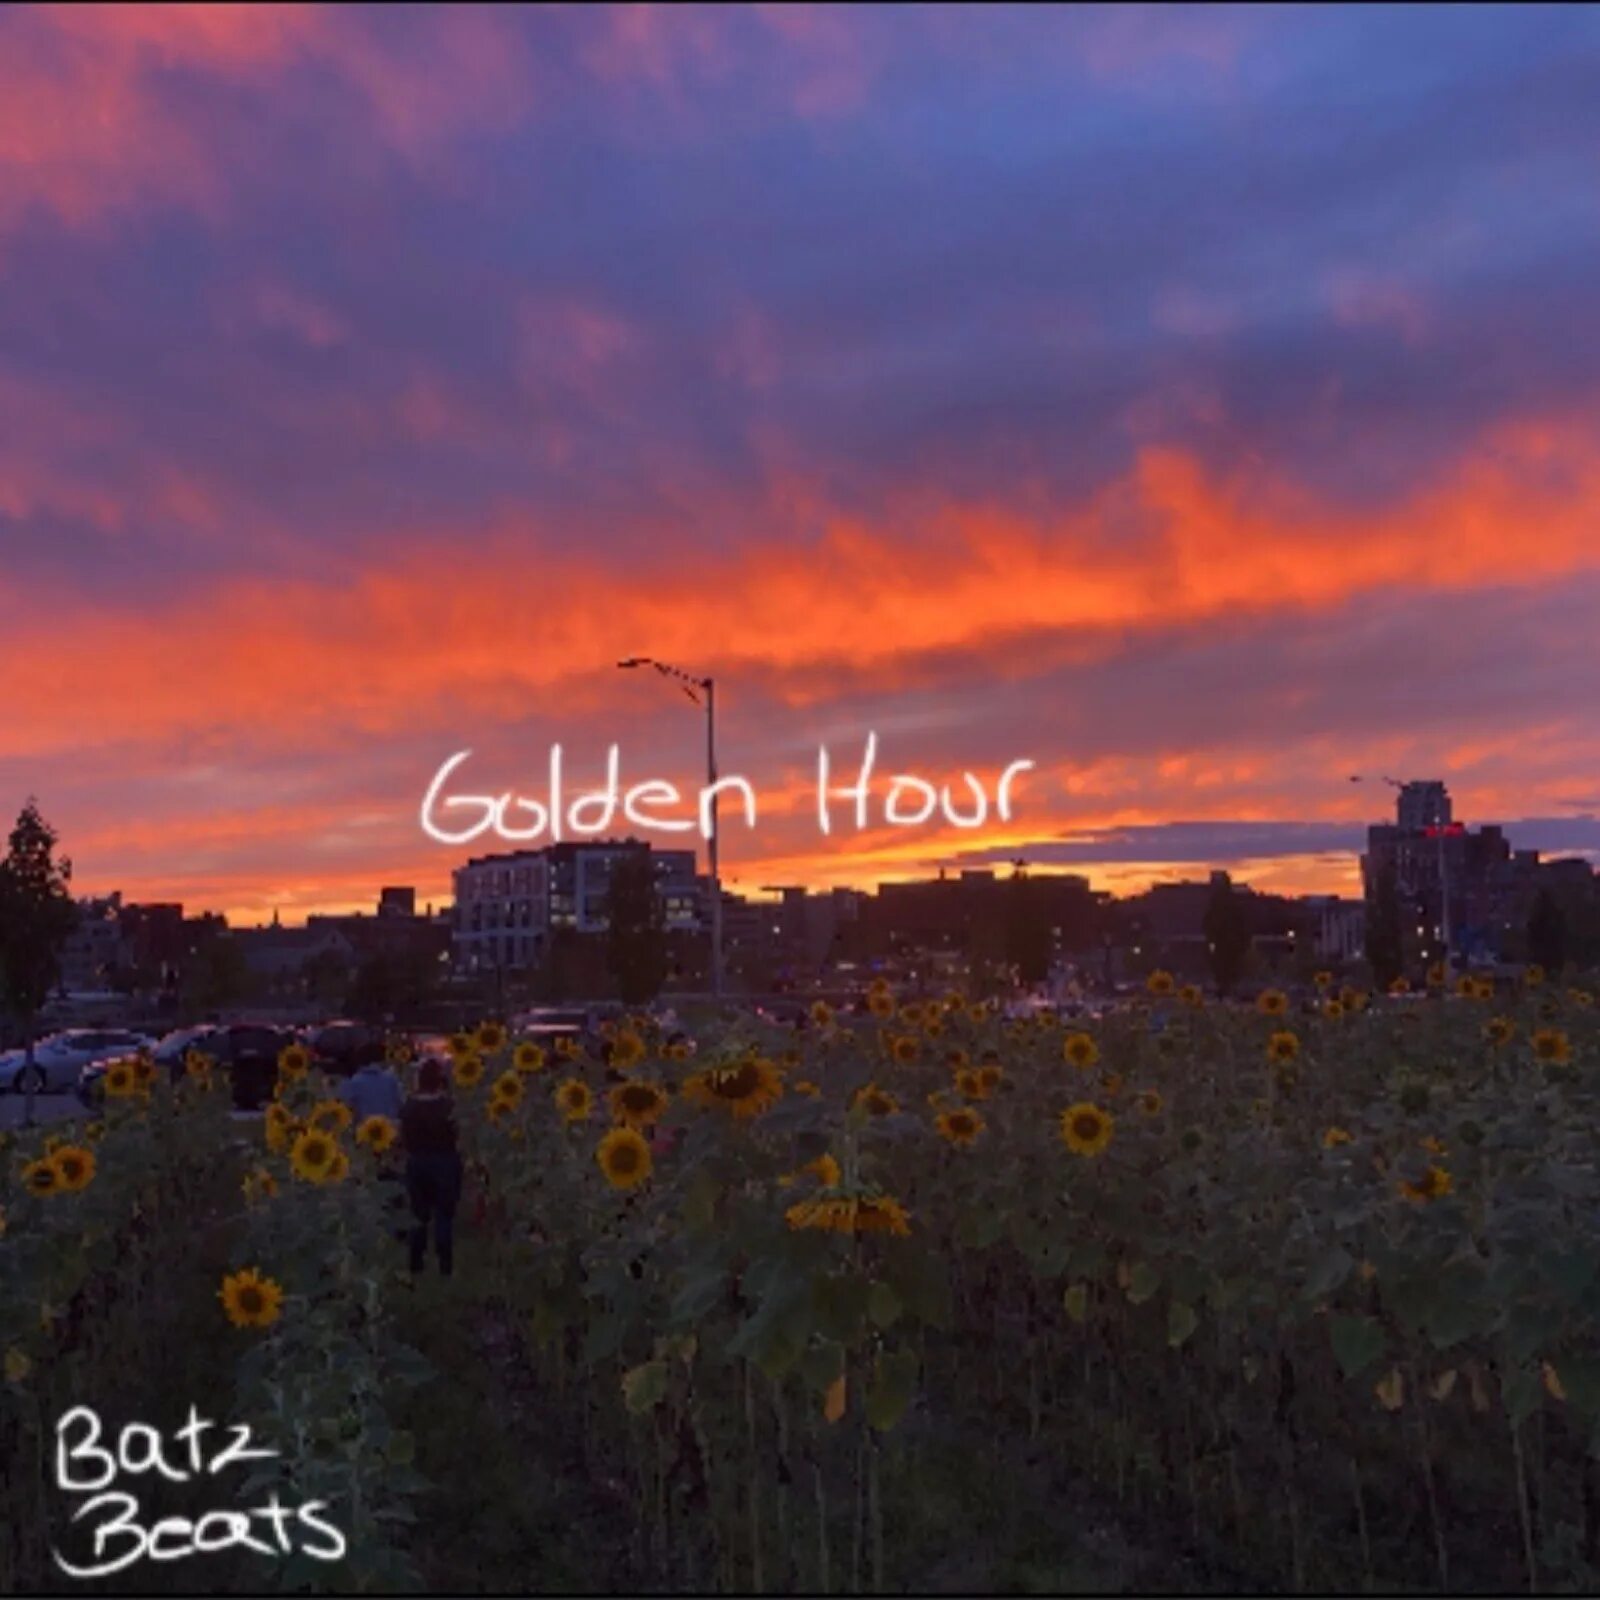 Golden hour слушать. Golden hour картинка песни. Shine its your Golden hour песня.